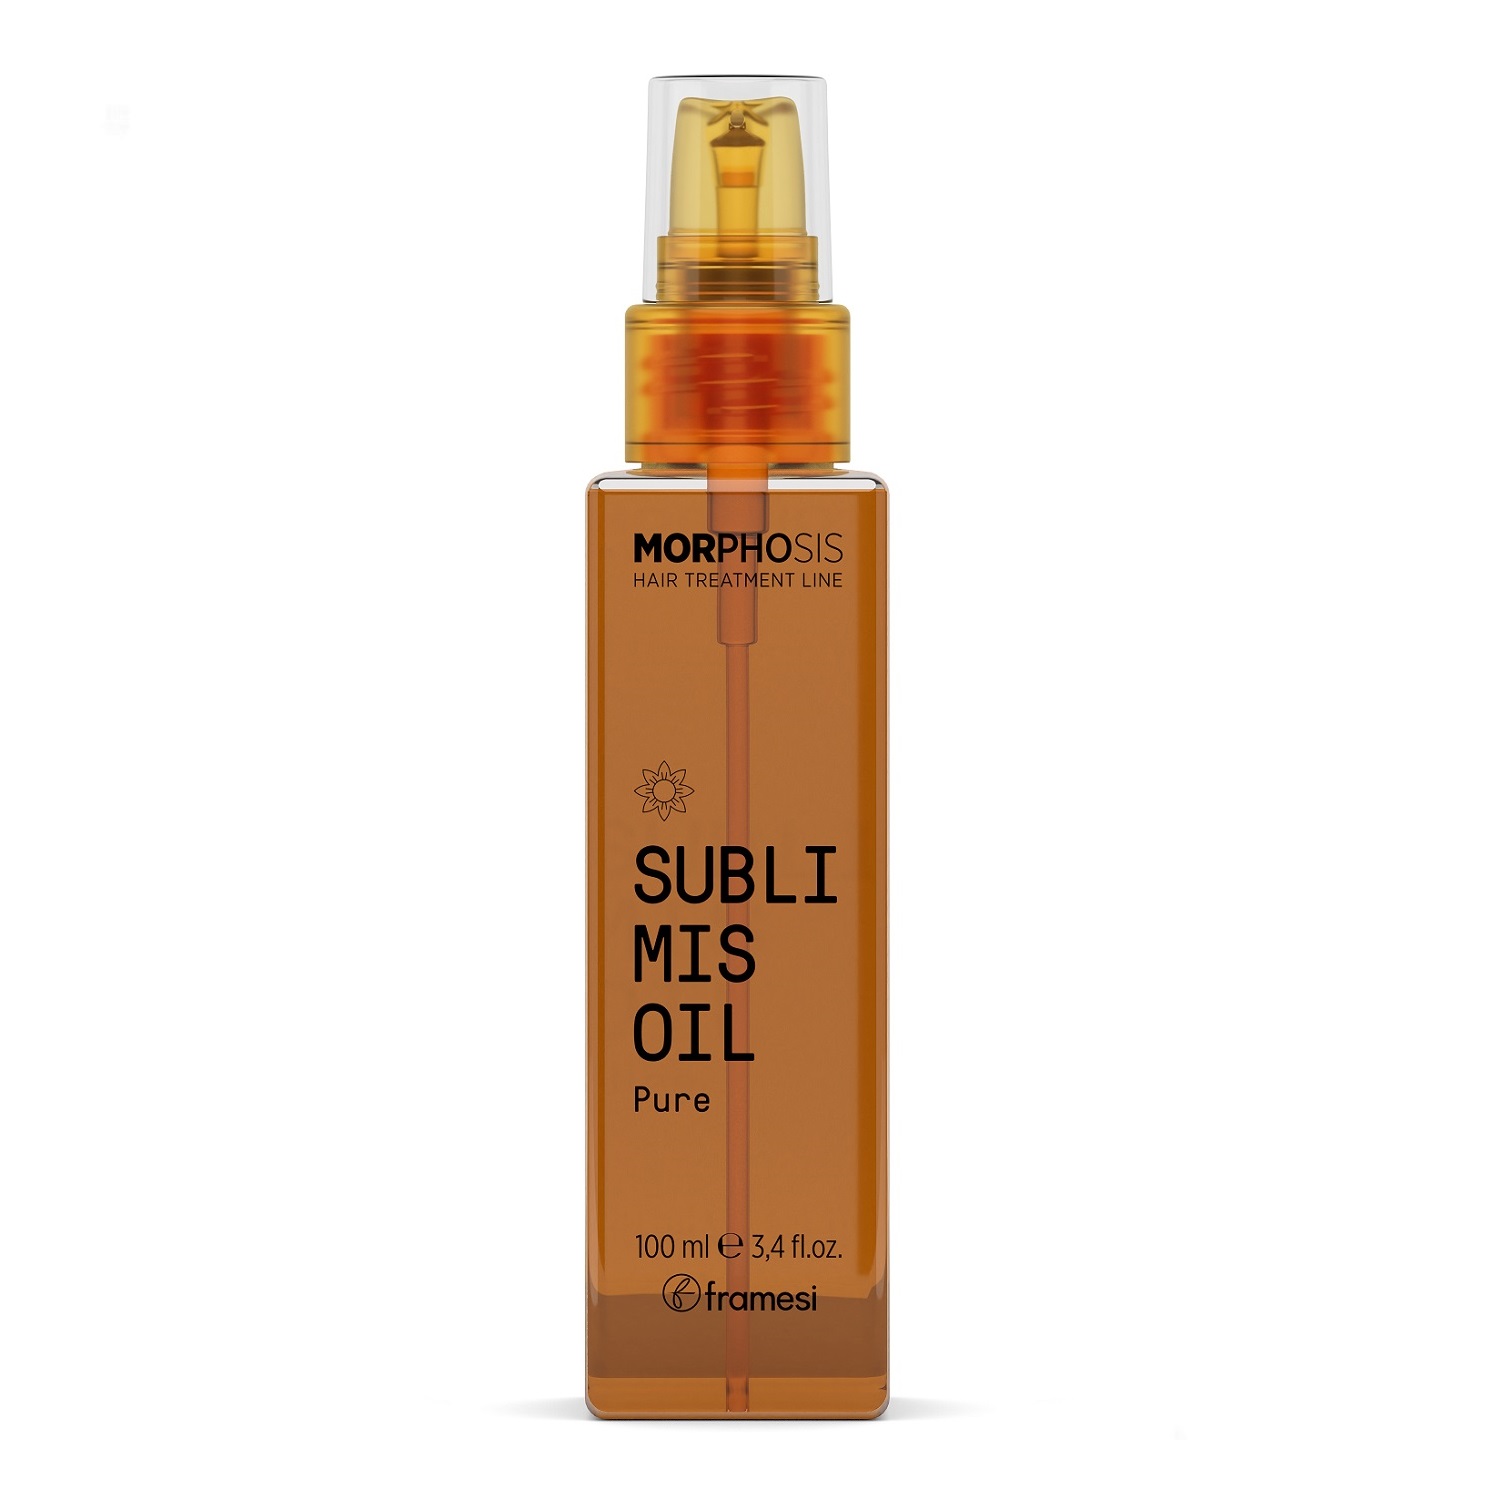 FRAMESI Аргановое масло для волос Sublimis Pure Oil, 100 мл (FRAMESI, Morphosis) цена и фото